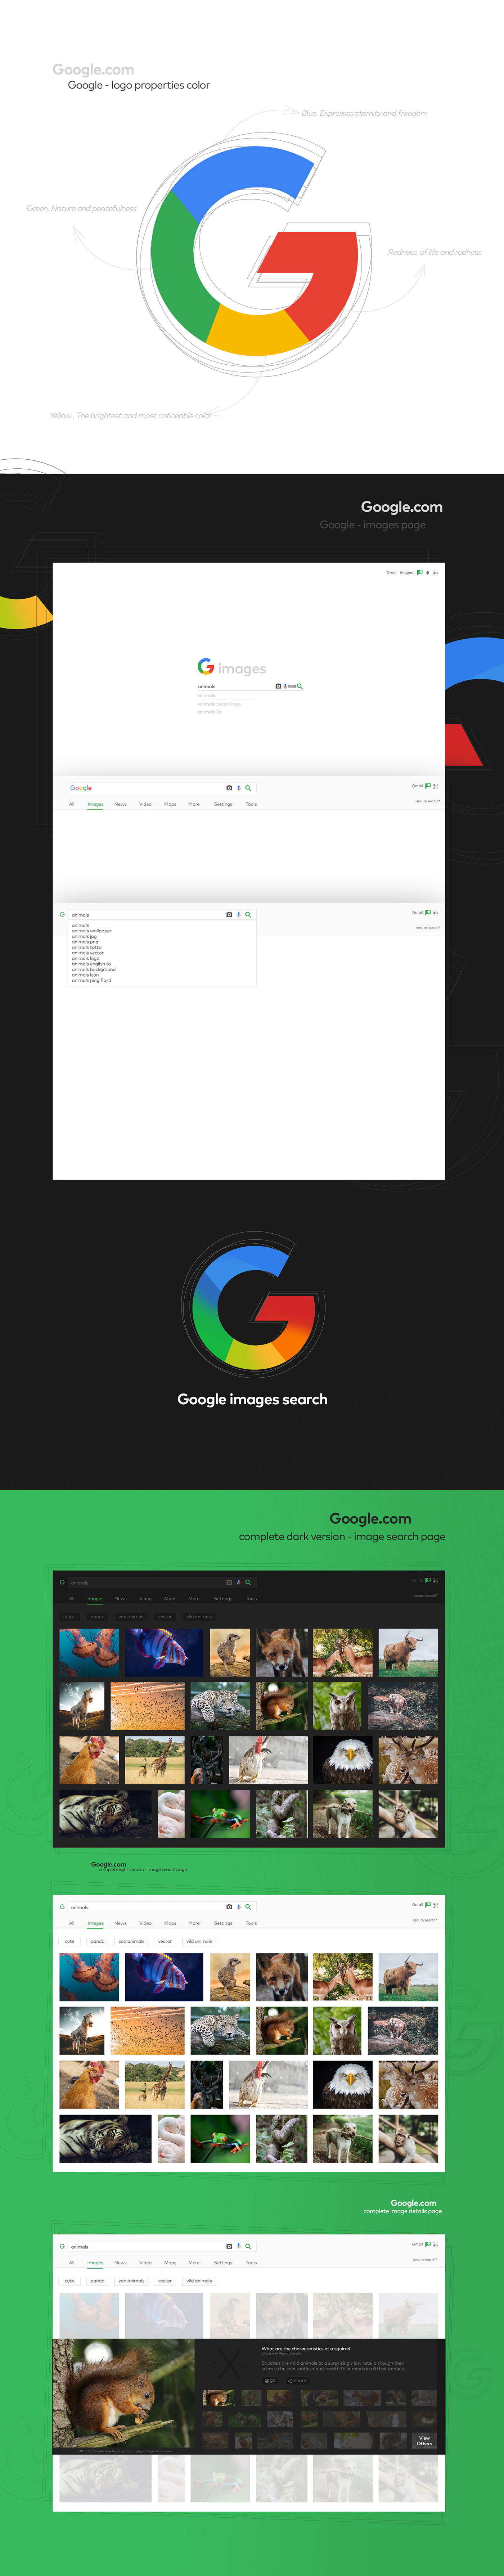 google UI ux coloring logo branding  muharrem yağan redesign Webdesign